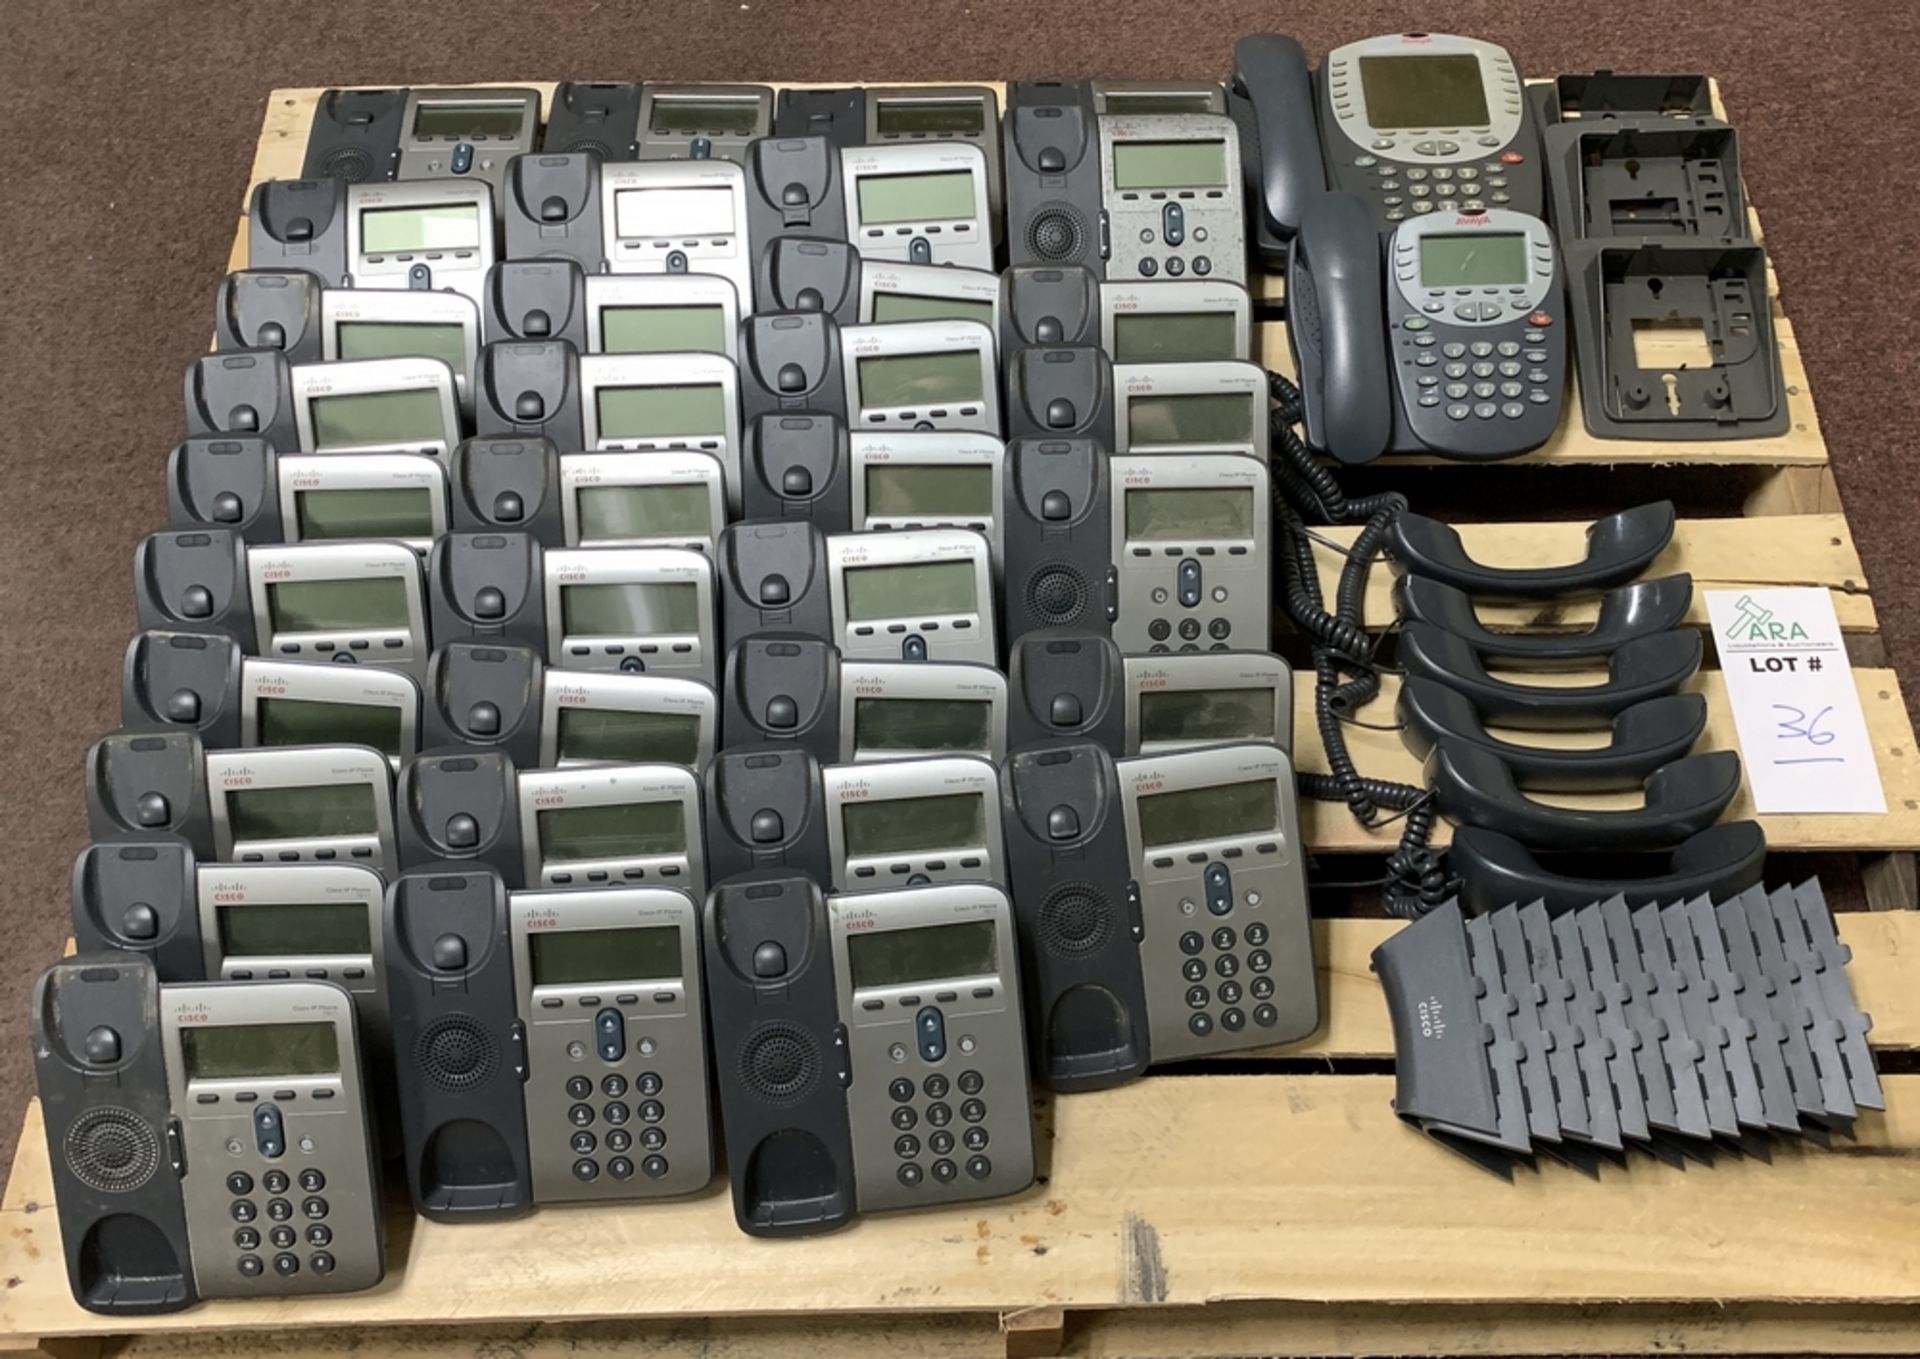 37 CISCO & AVAYA PHONE SYSTEMS  - 35 CISCO MODEL 7911 & 2 AVAYA PHONE SYSTEMS ALL ITEMS ARE SOLD - Image 3 of 6